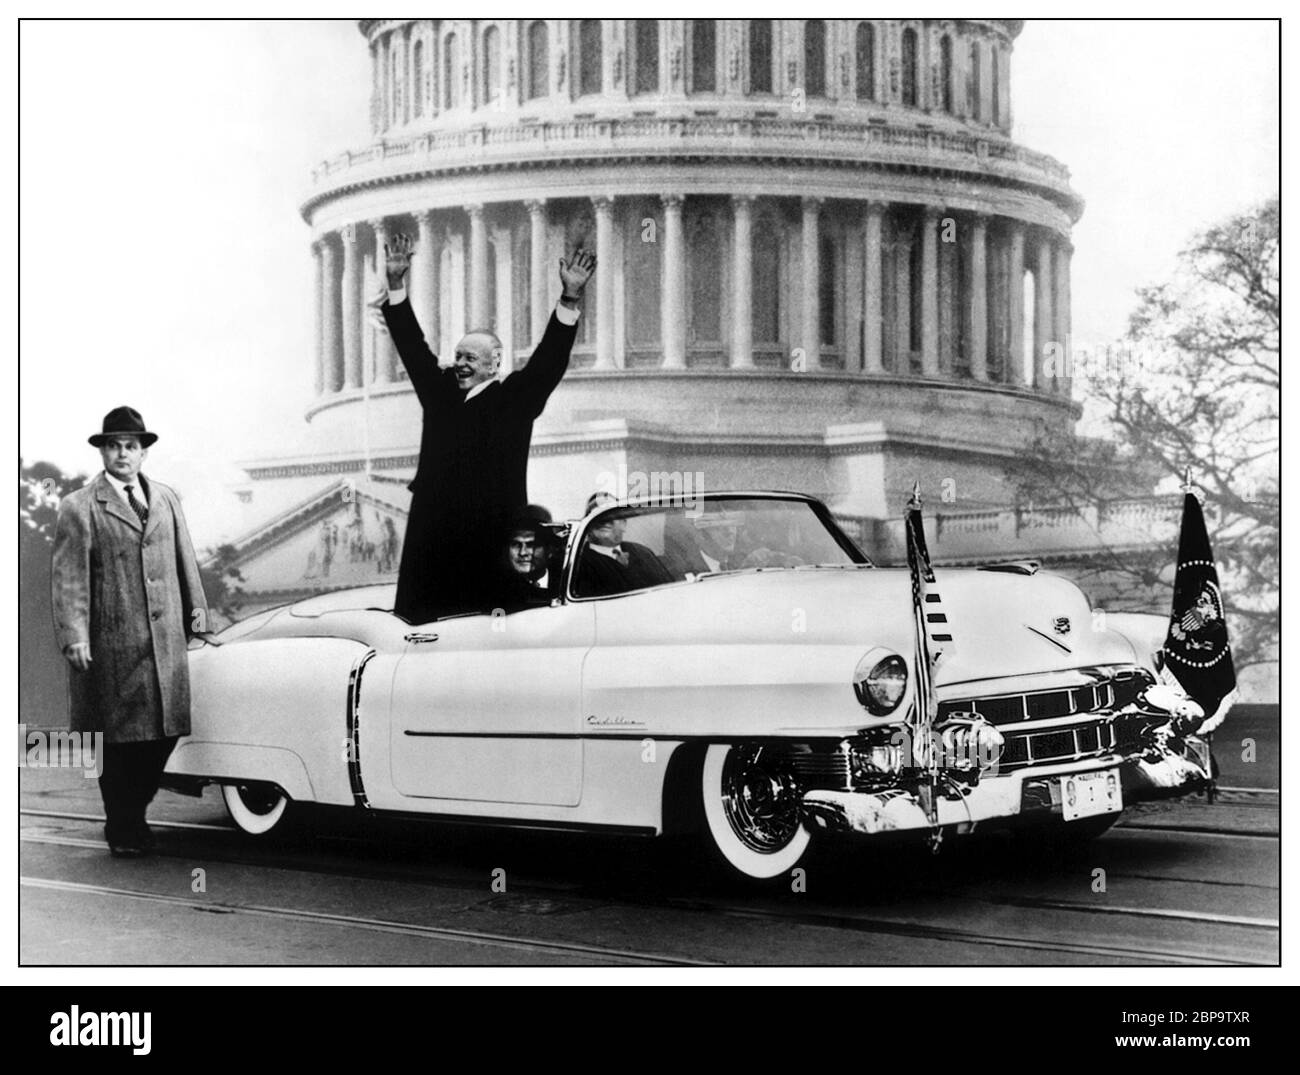 1953 Cadillac Sixty-Two Eldorado Special, avec Dwight D. Eisenhower à son premier inauguration dans un Cadillac blanc Eldorado Washington DC USA Banque D'Images